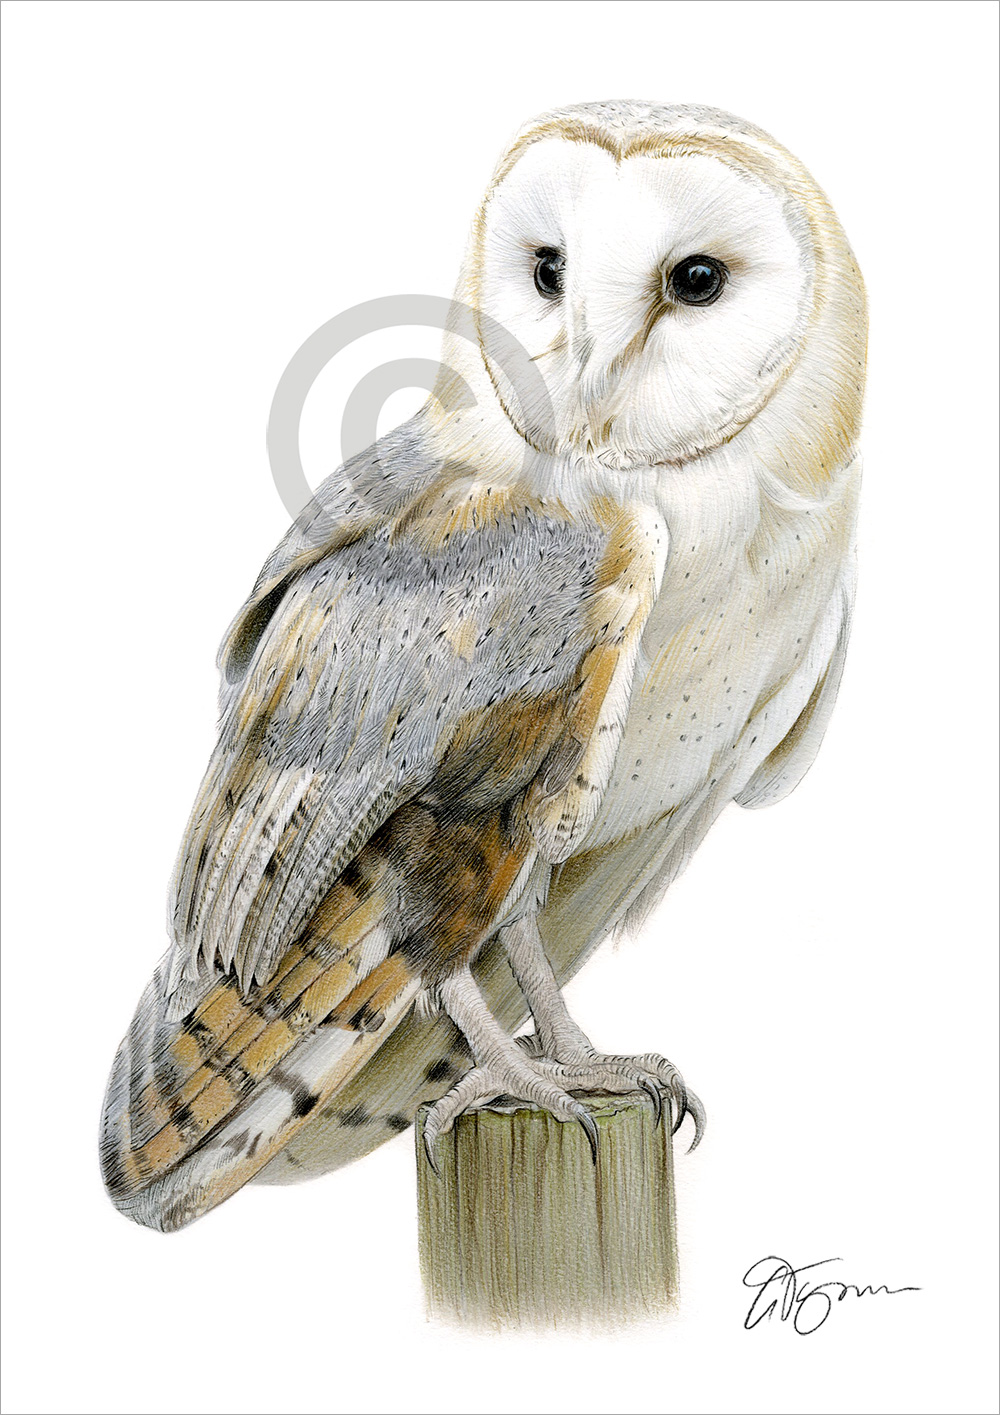 Colour pencil drawing of a barn owl by artist Gary Tymon